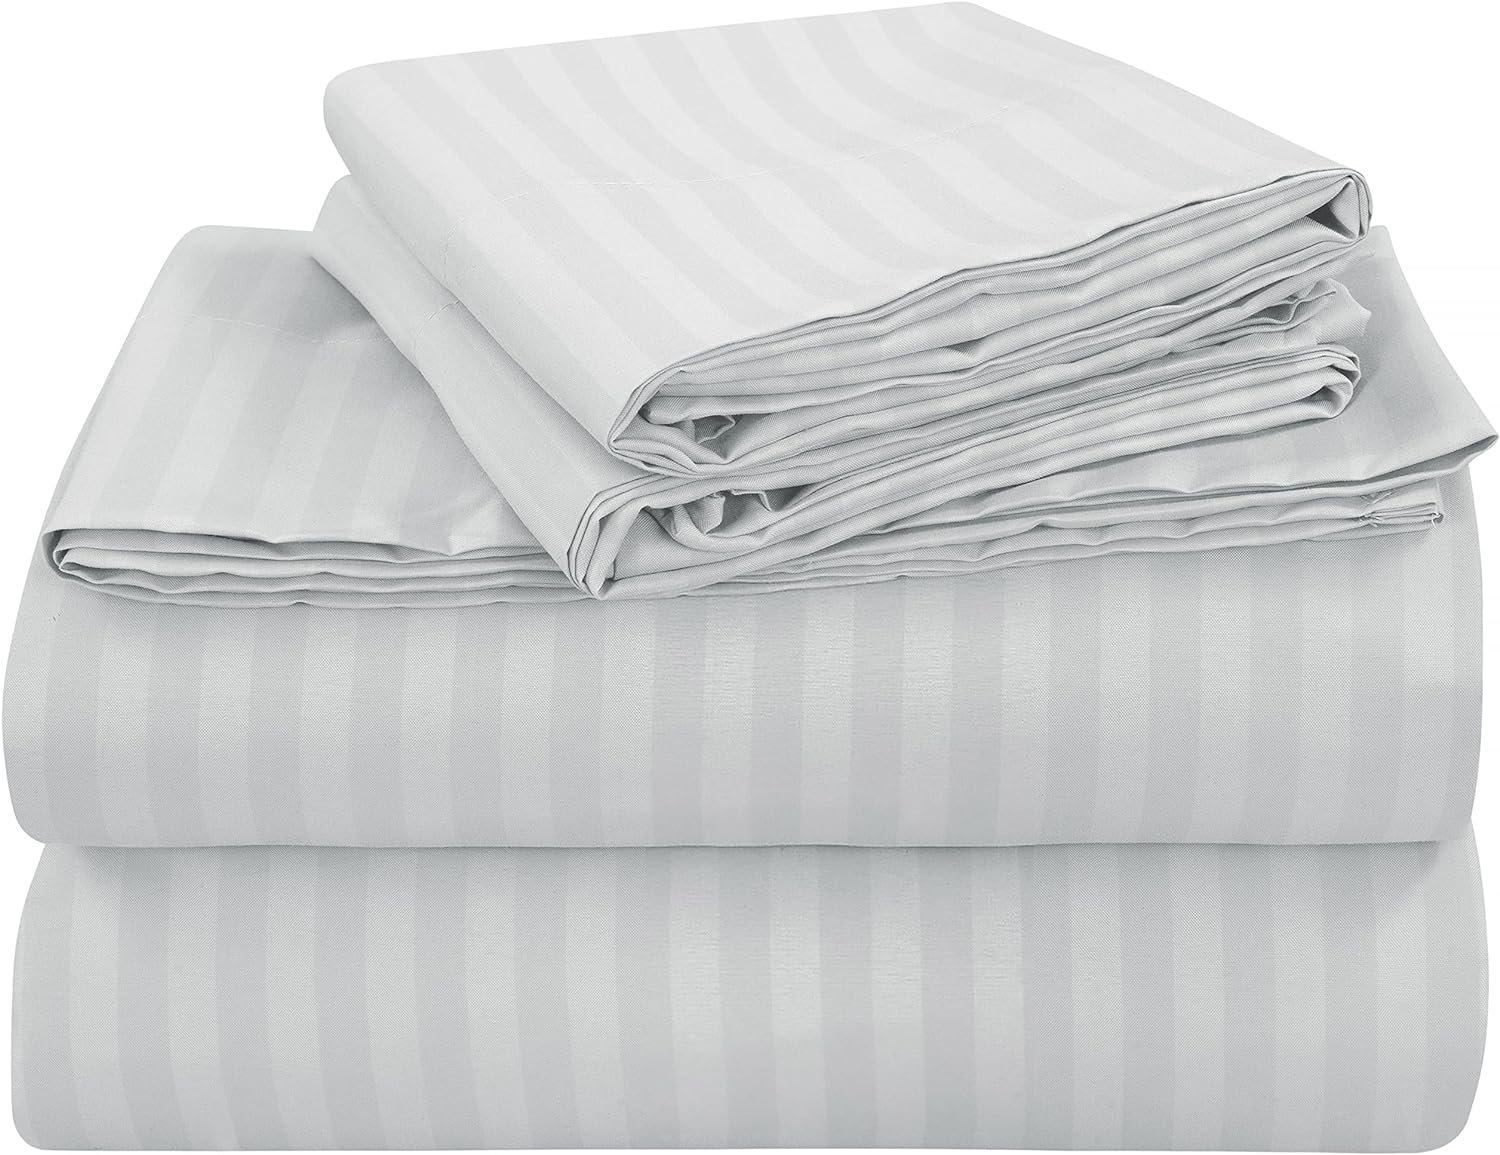 Royale Linens - 4 Piece Full Bed Sheet - Soft Brushed Microfiber 1800 Bedding Set - 1 Fitted Sheet, 1 Flat Sheet, 2 Pillow case - Wrinkle &Fade Resistant Luxury Full Size Sheet Set (Full,StripeSilver)